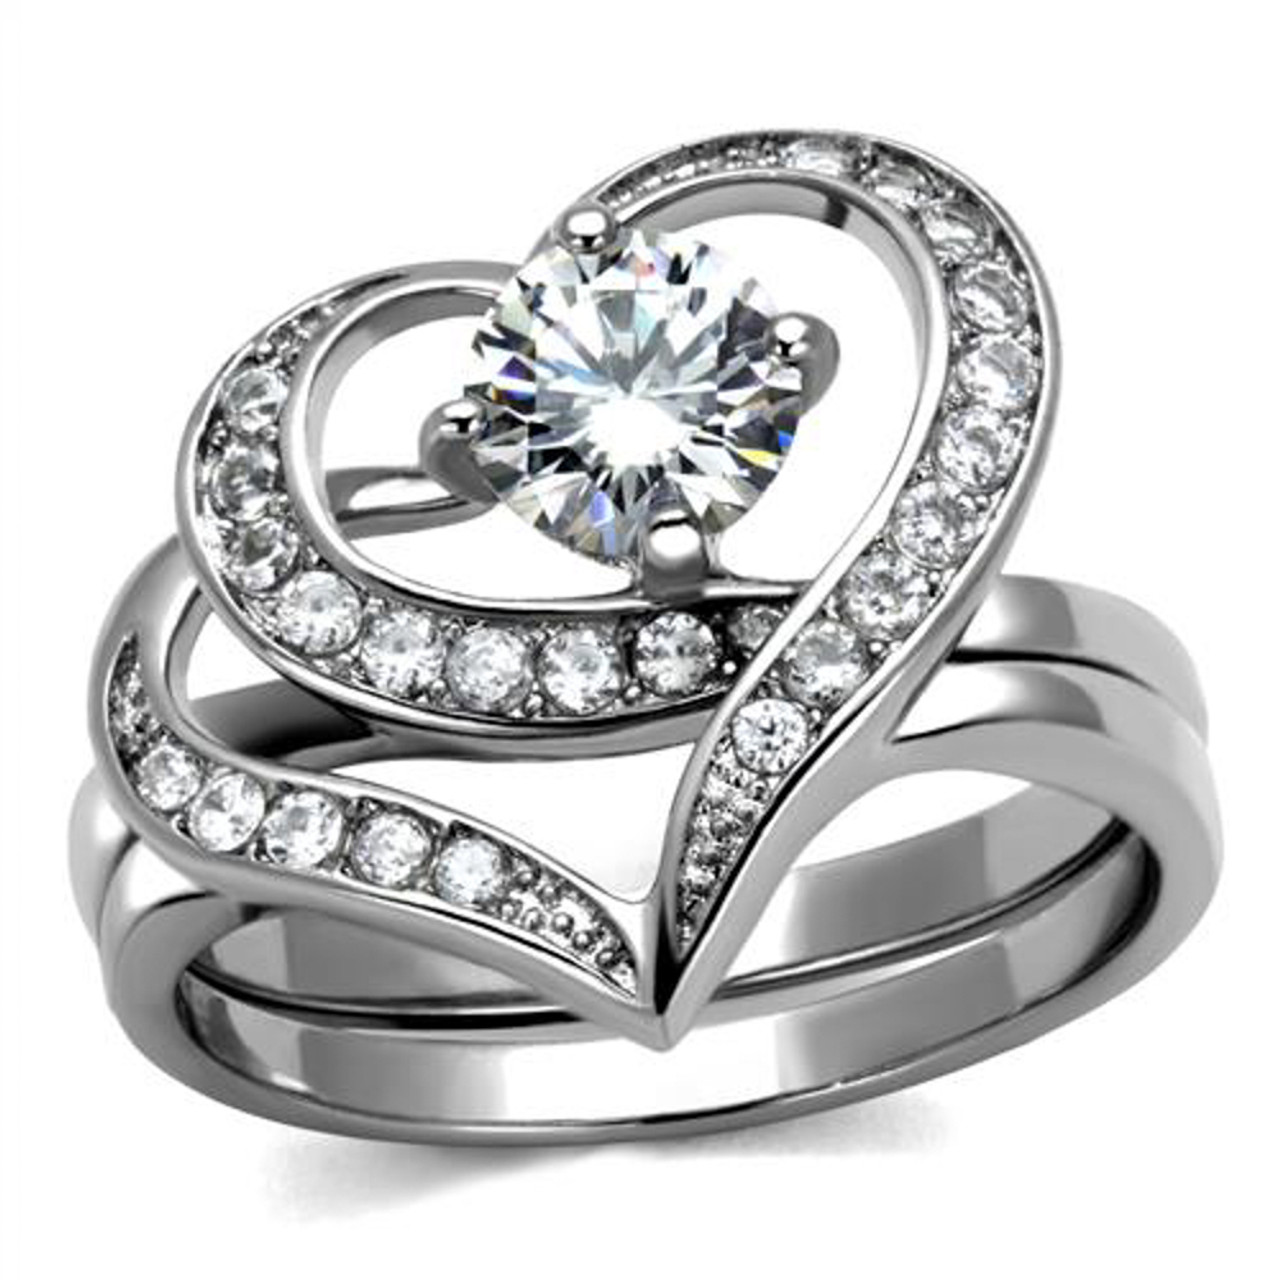 ARTK2868 Stainless Steel 1.2 Ct Round Cut Cz 2 Piece Heart Shape Women's Wedding  Ring Set 